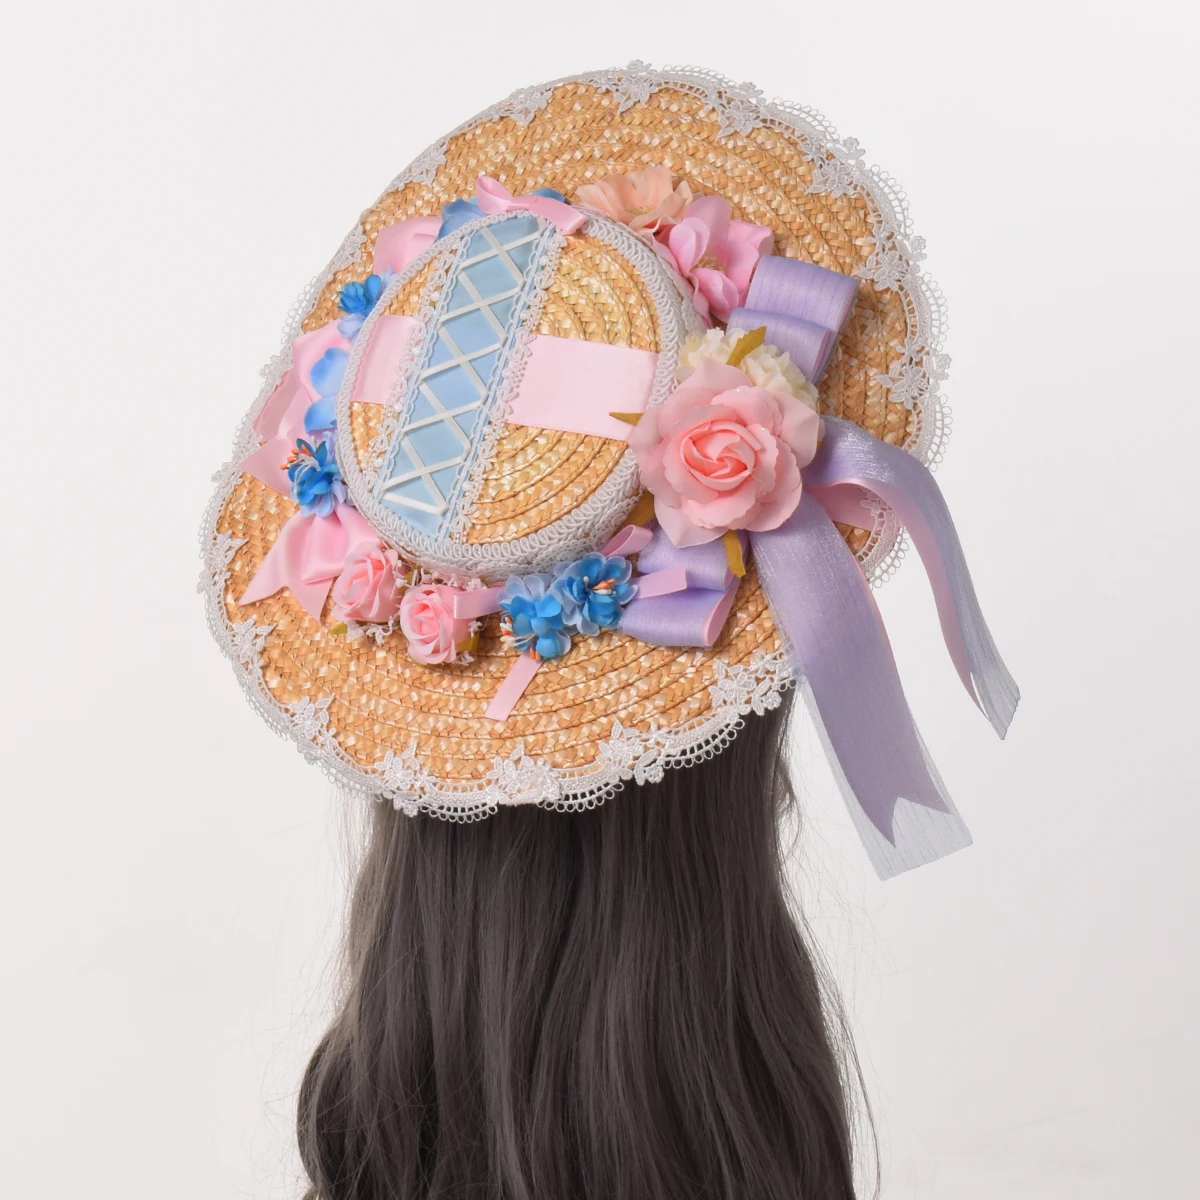 Lolita Straw Hat Women Girl Victorian Pastoral Style Lace Bonnet Hat for Costume Tea Party Flat Cap